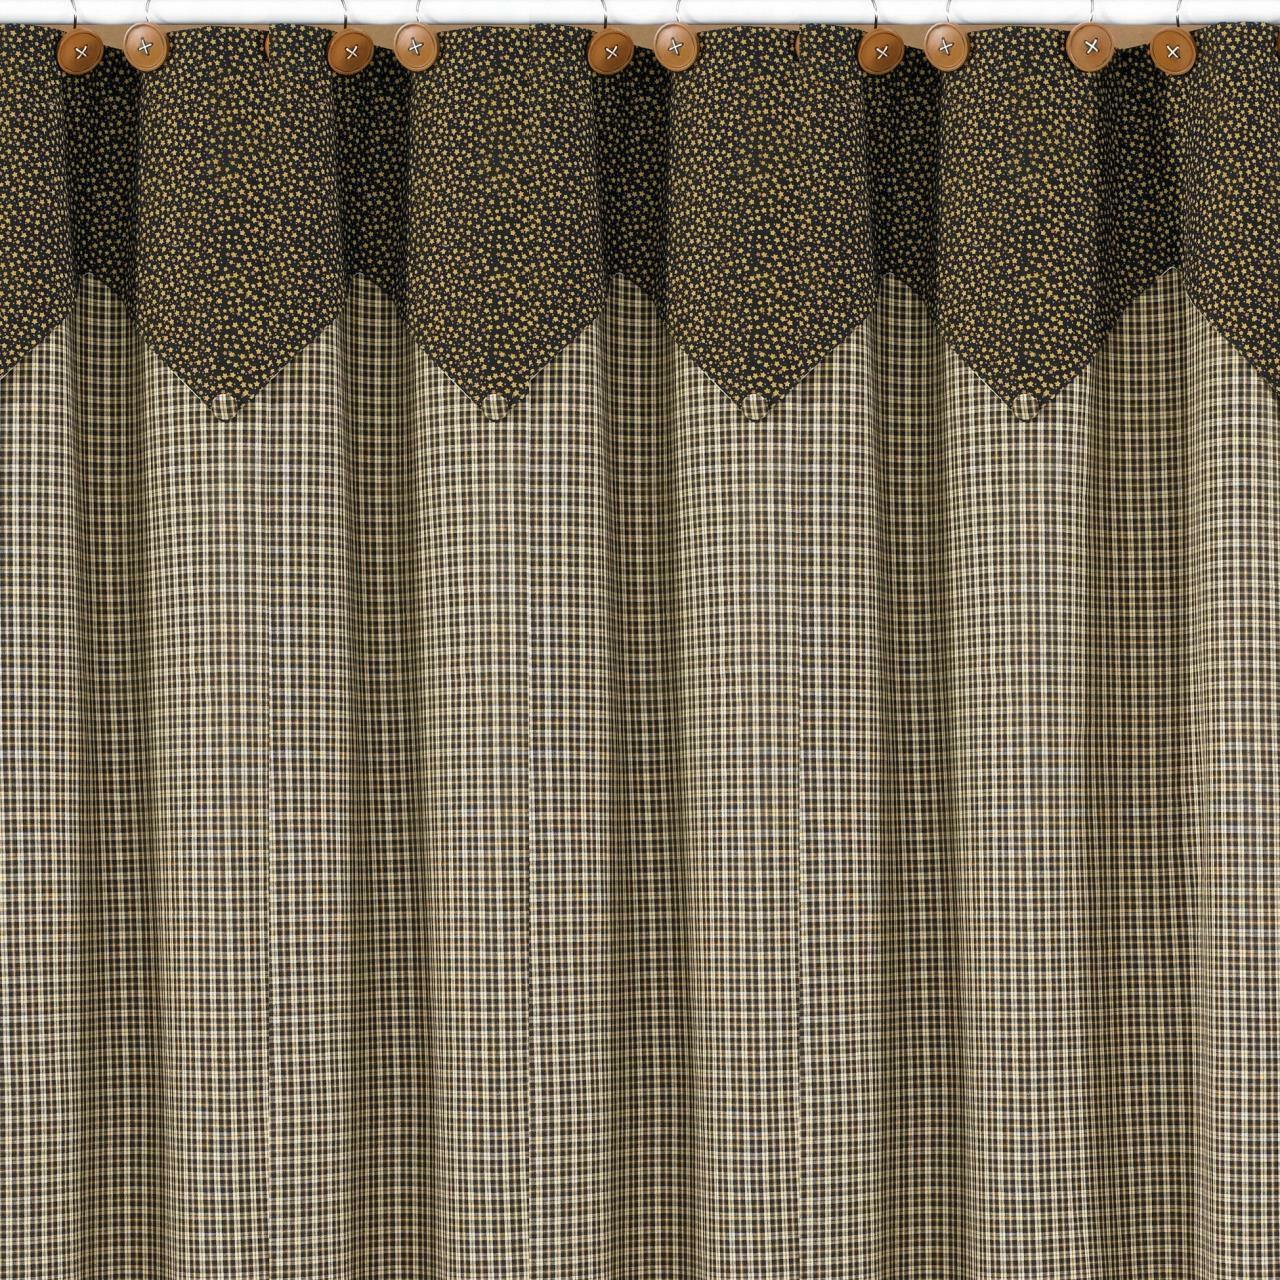 Cider Mill Shower Curtain - 72" x 72" Park Designs - The Fox Decor